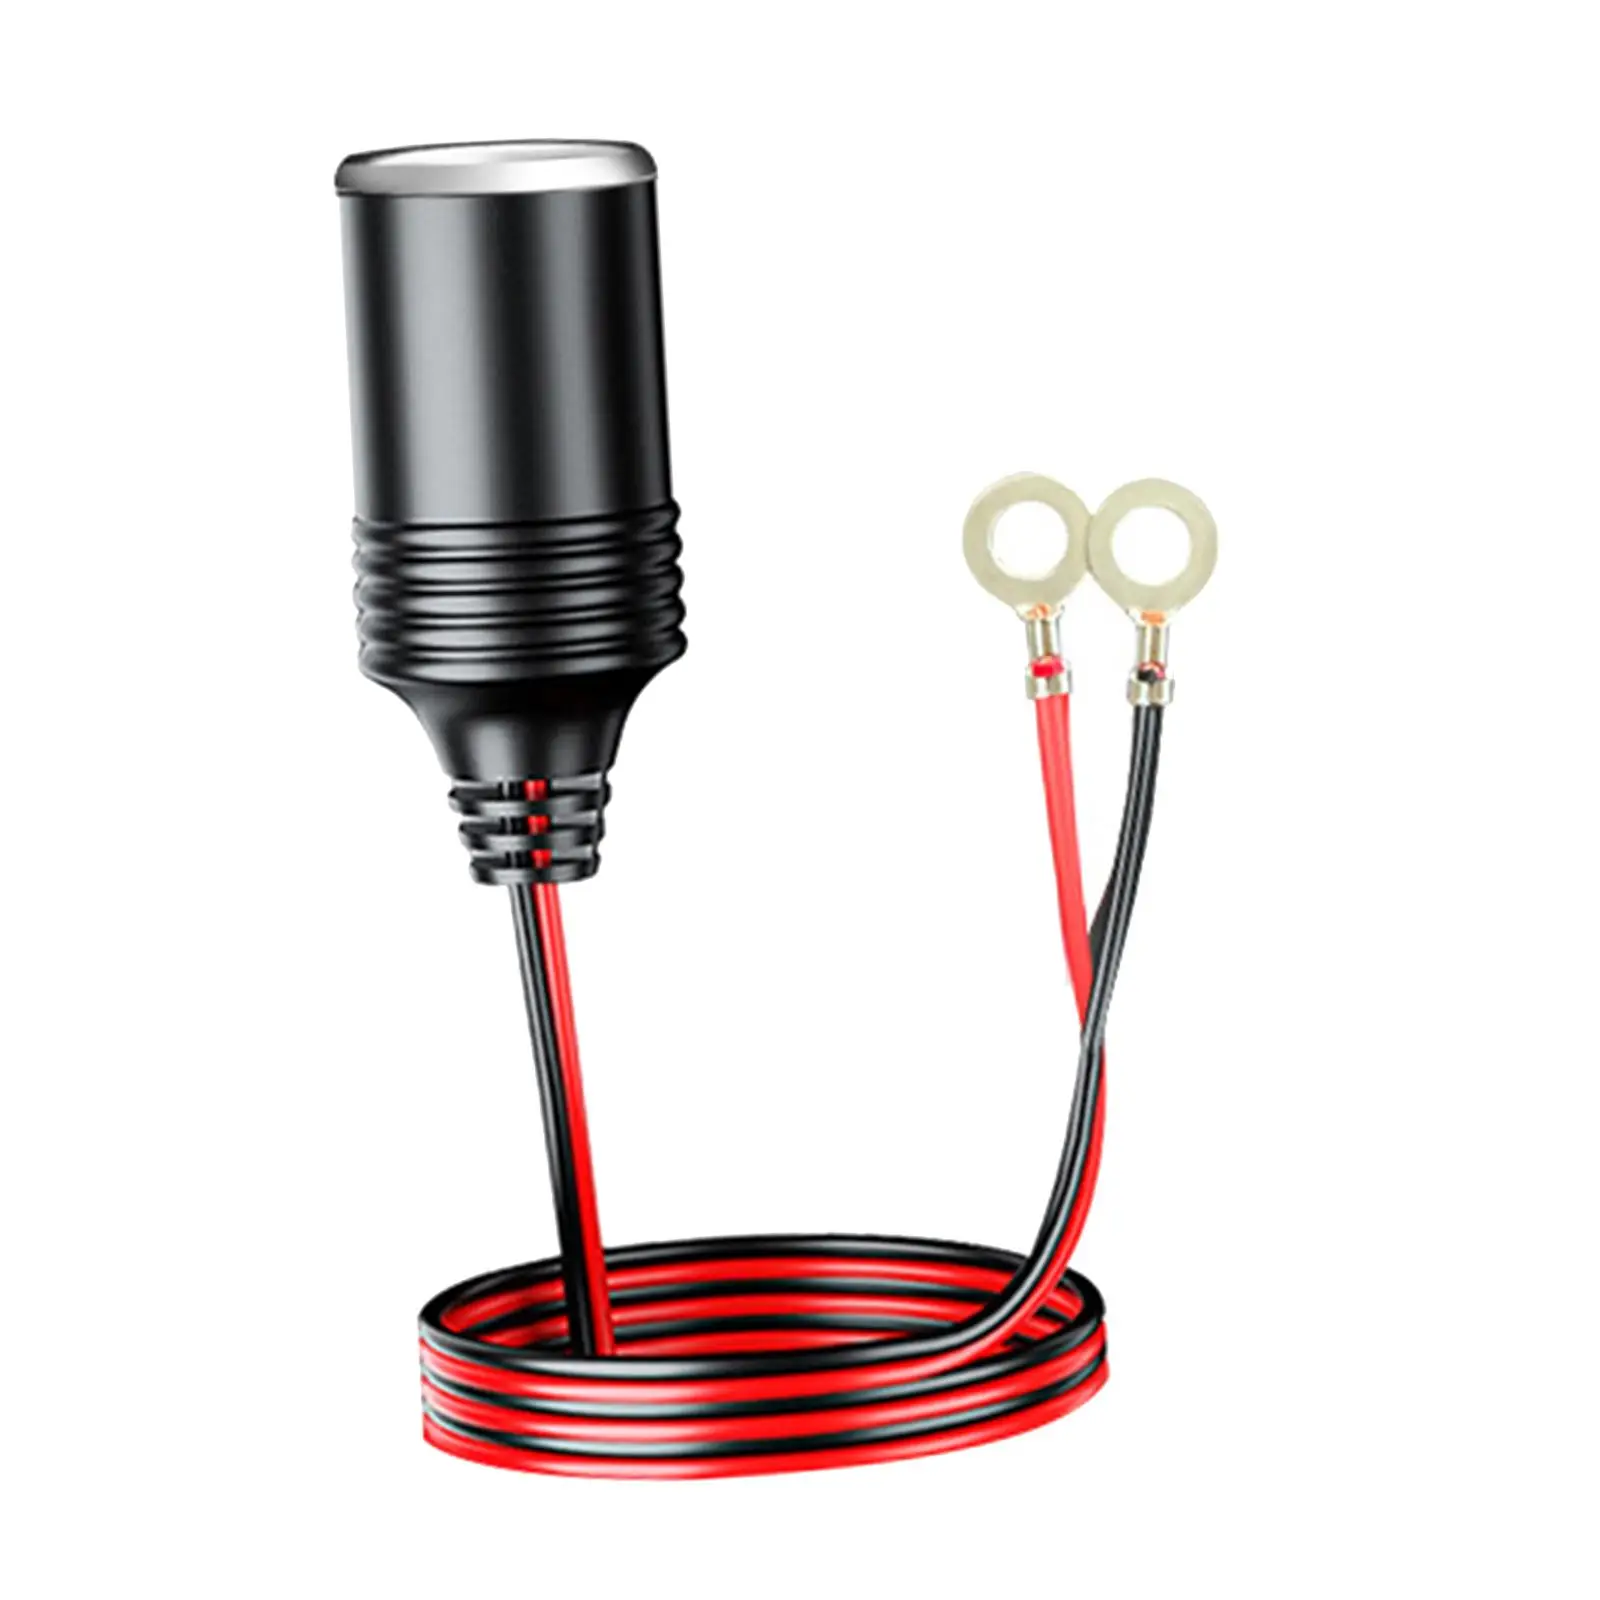 Cigarette Lighter Adapter Power Supply Cord Easy to Install Durable 12V 24V